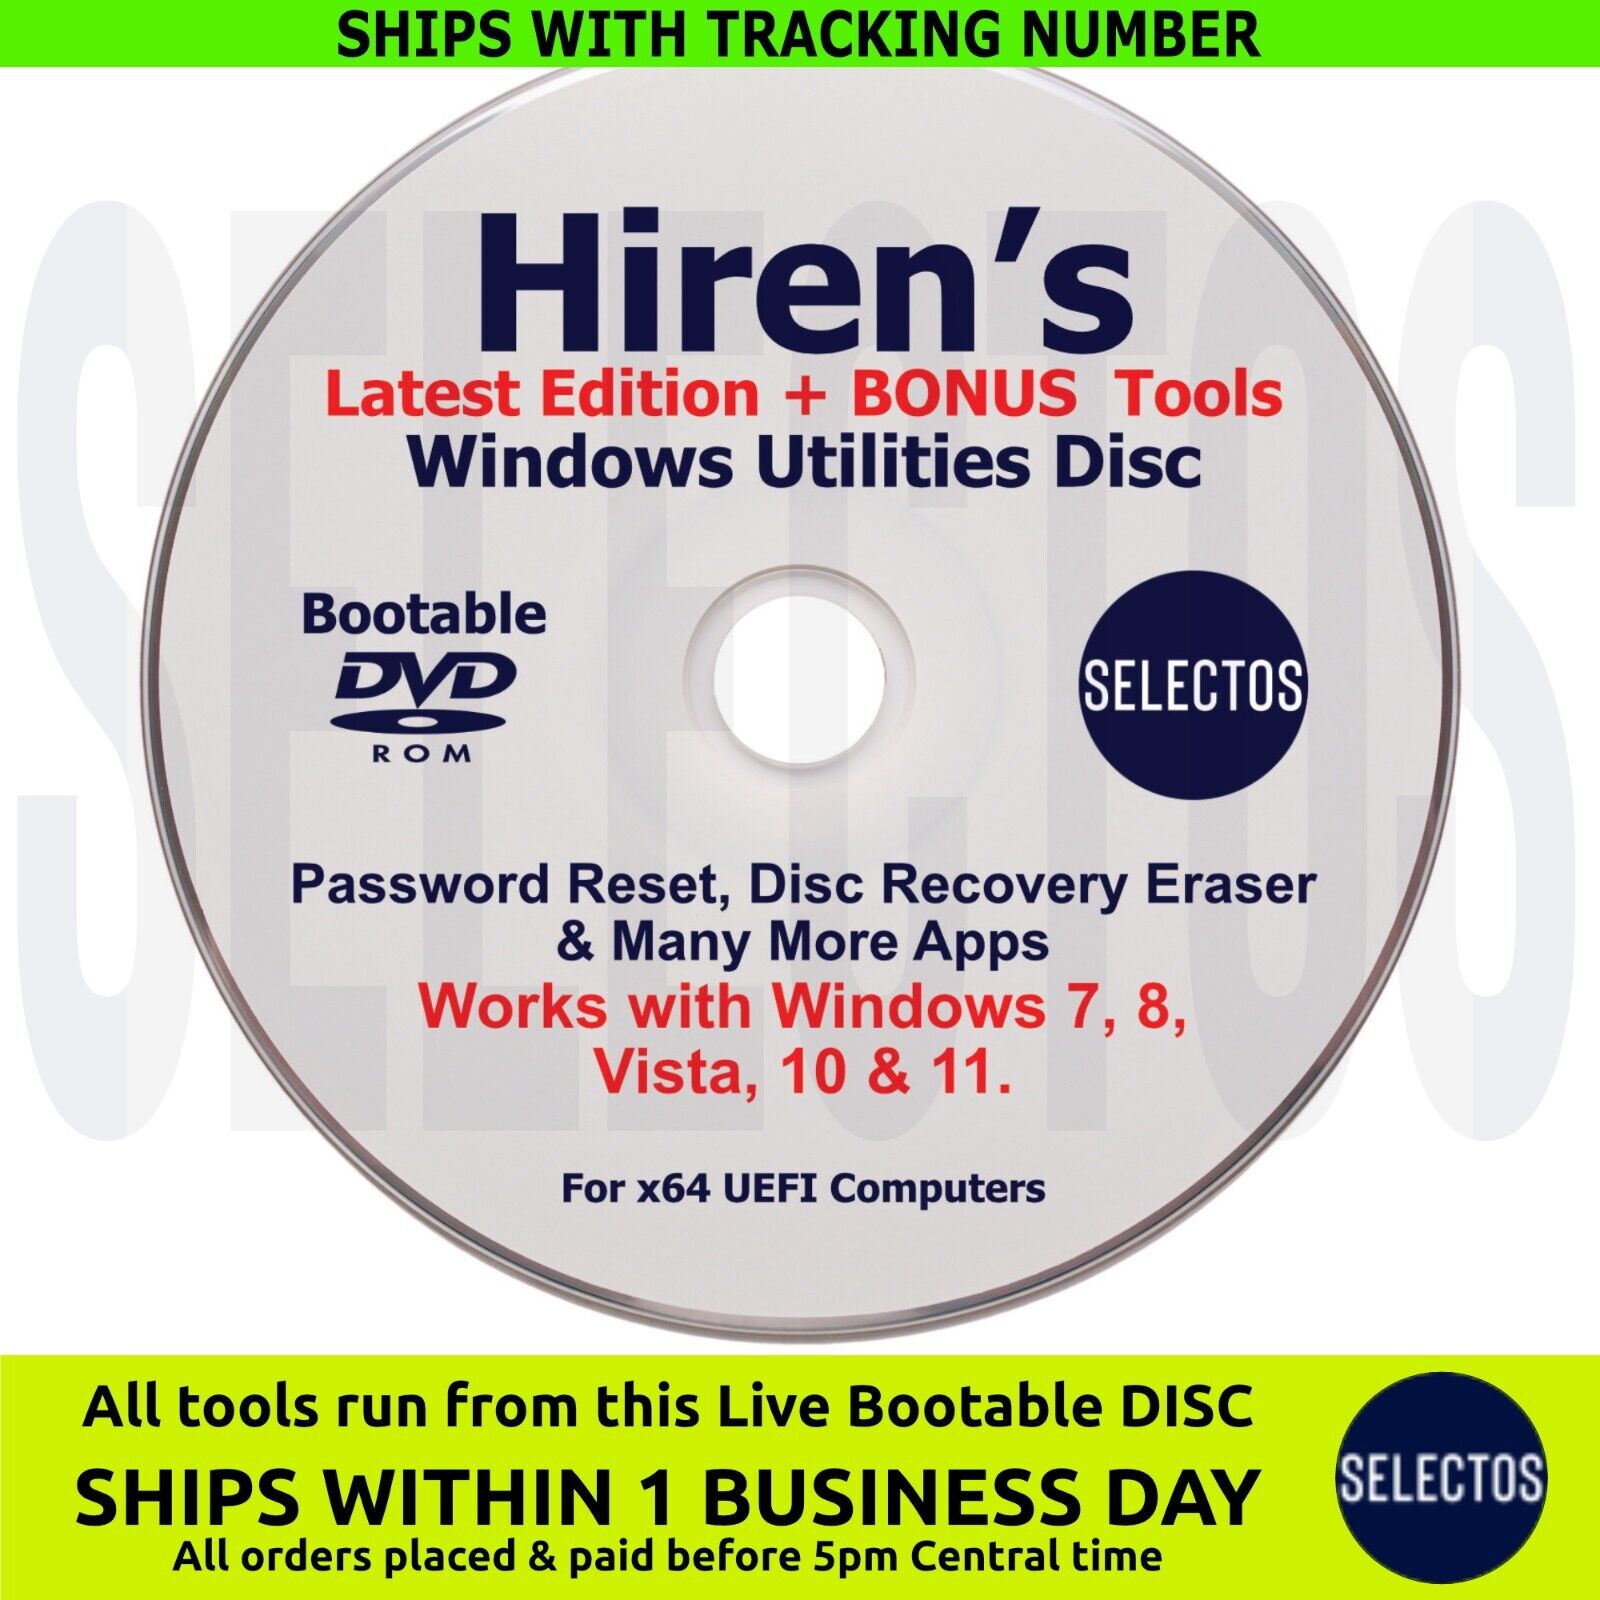 Hiren's Boot CD PC Utilities Disc Password Reset Disk Recovery &More +Apps List